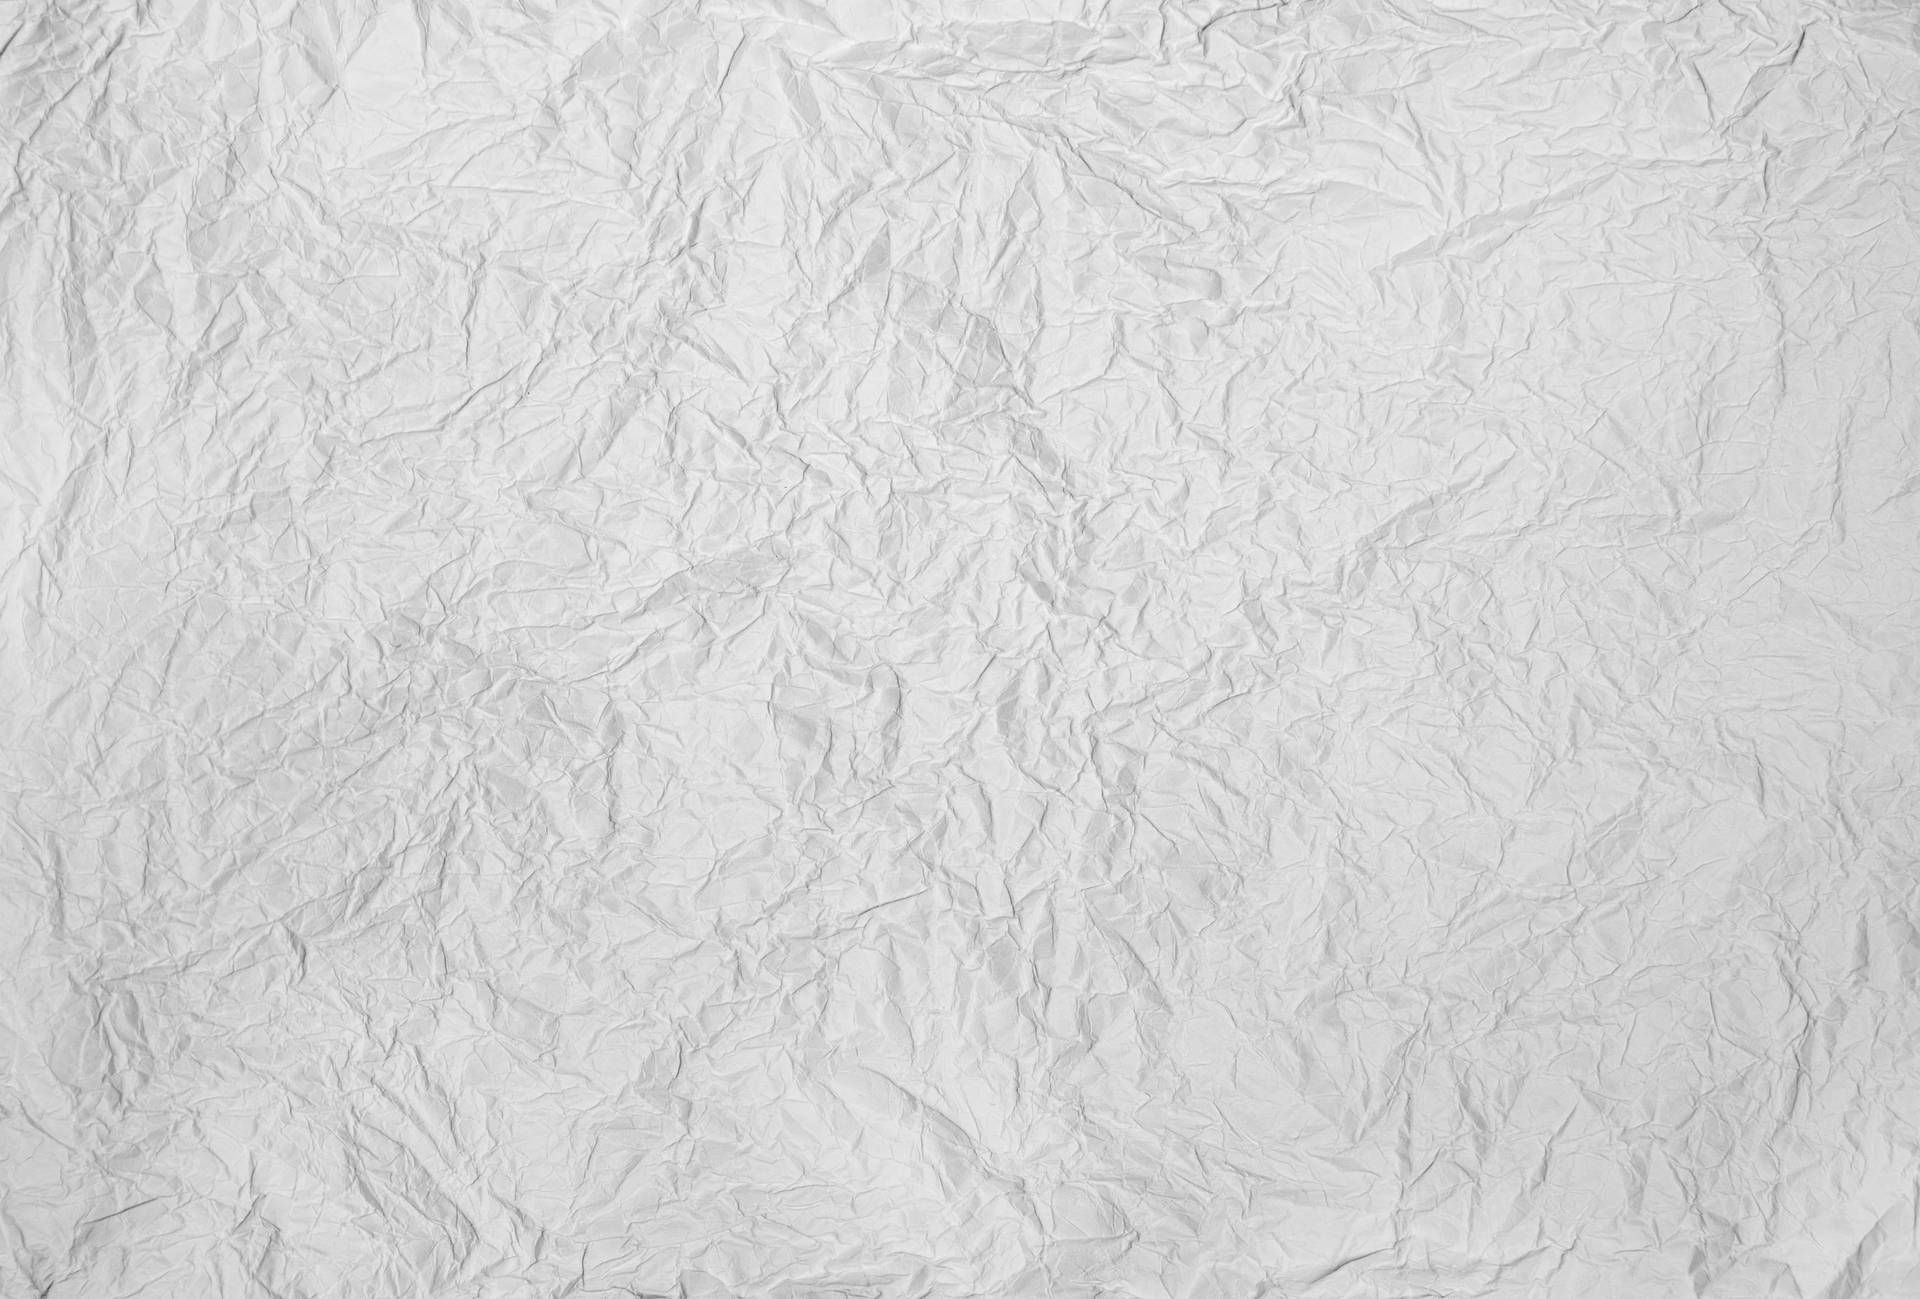 Blank Crumpled Paper Wallpaper